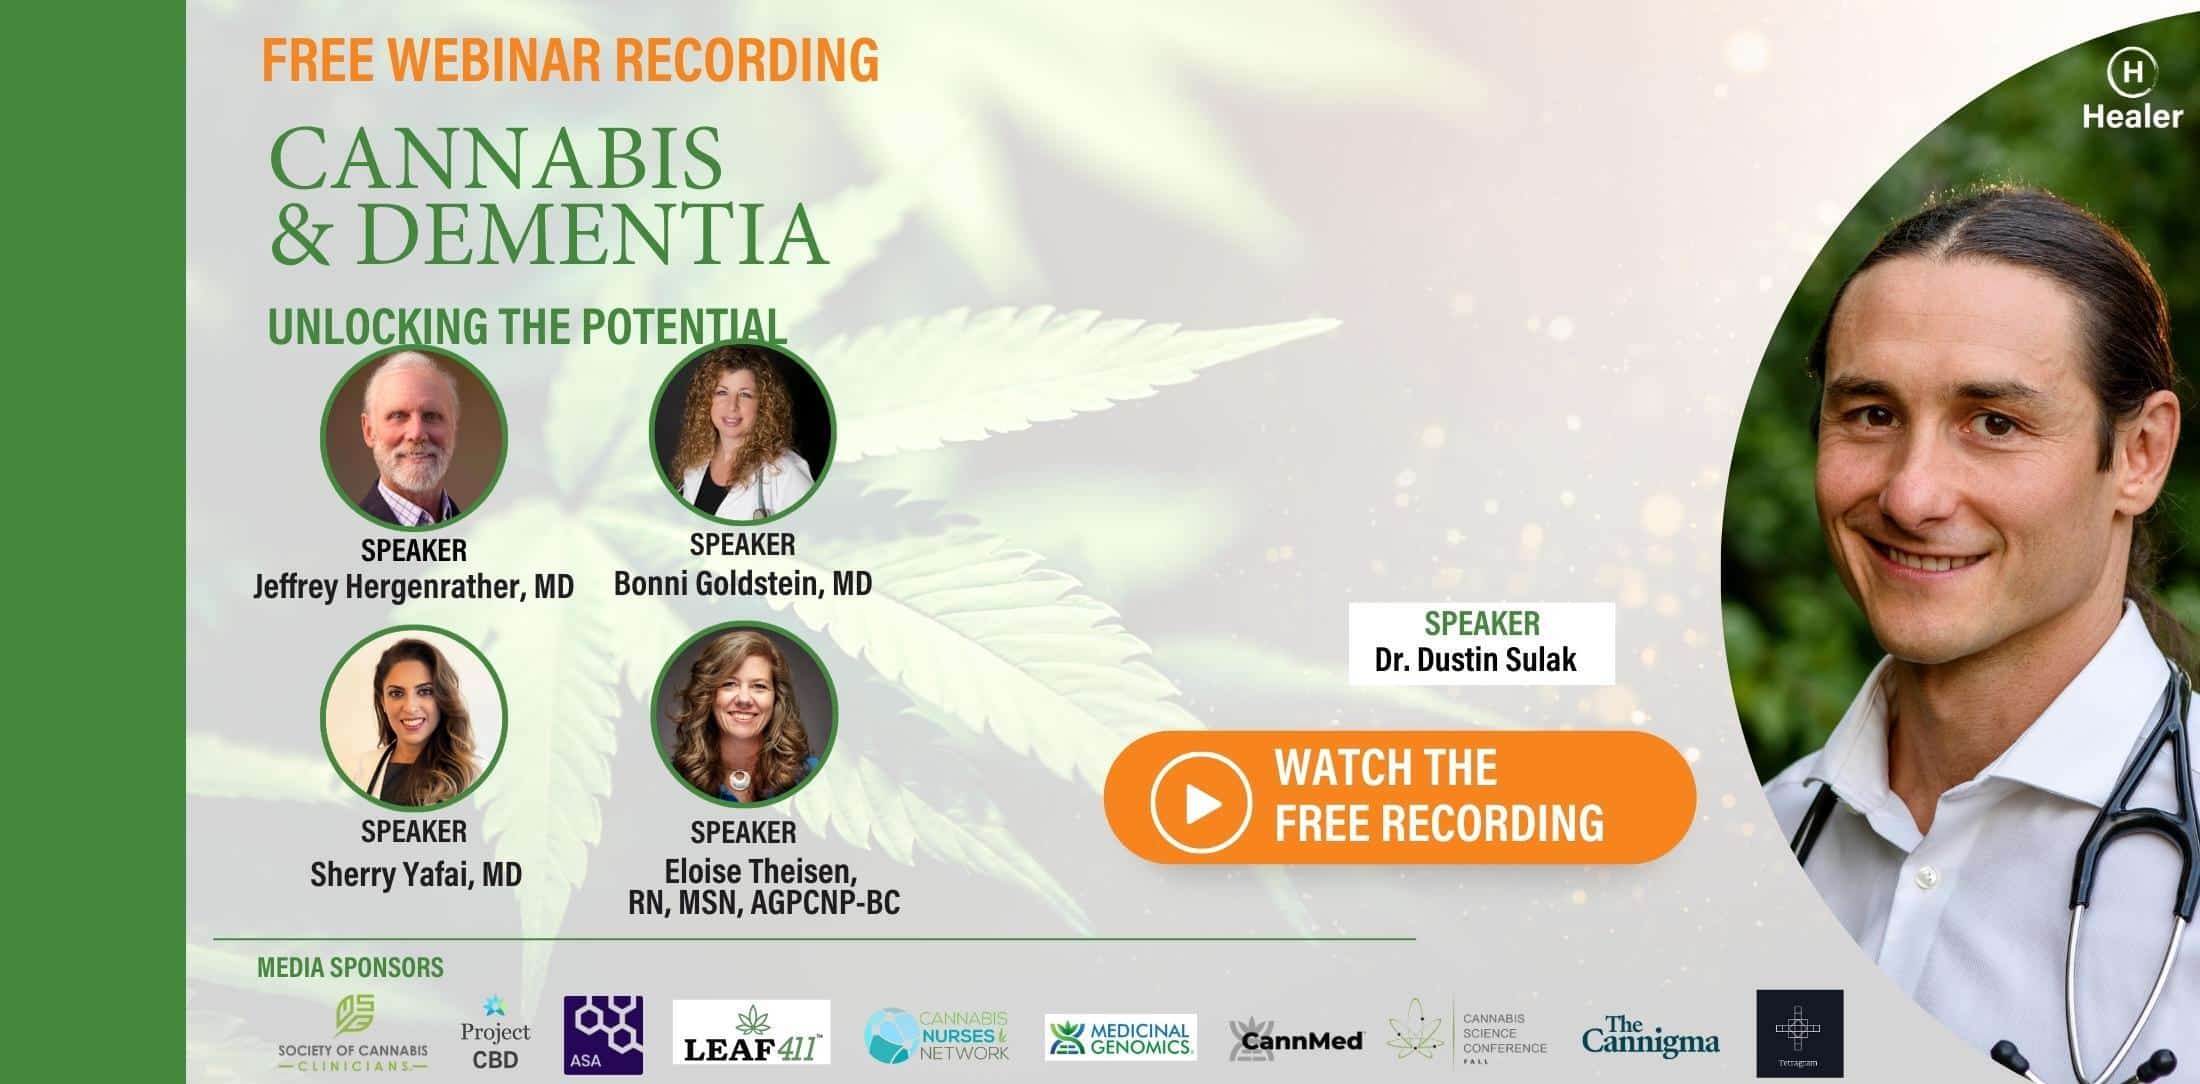 Healer cannabis and dementia webinar recording